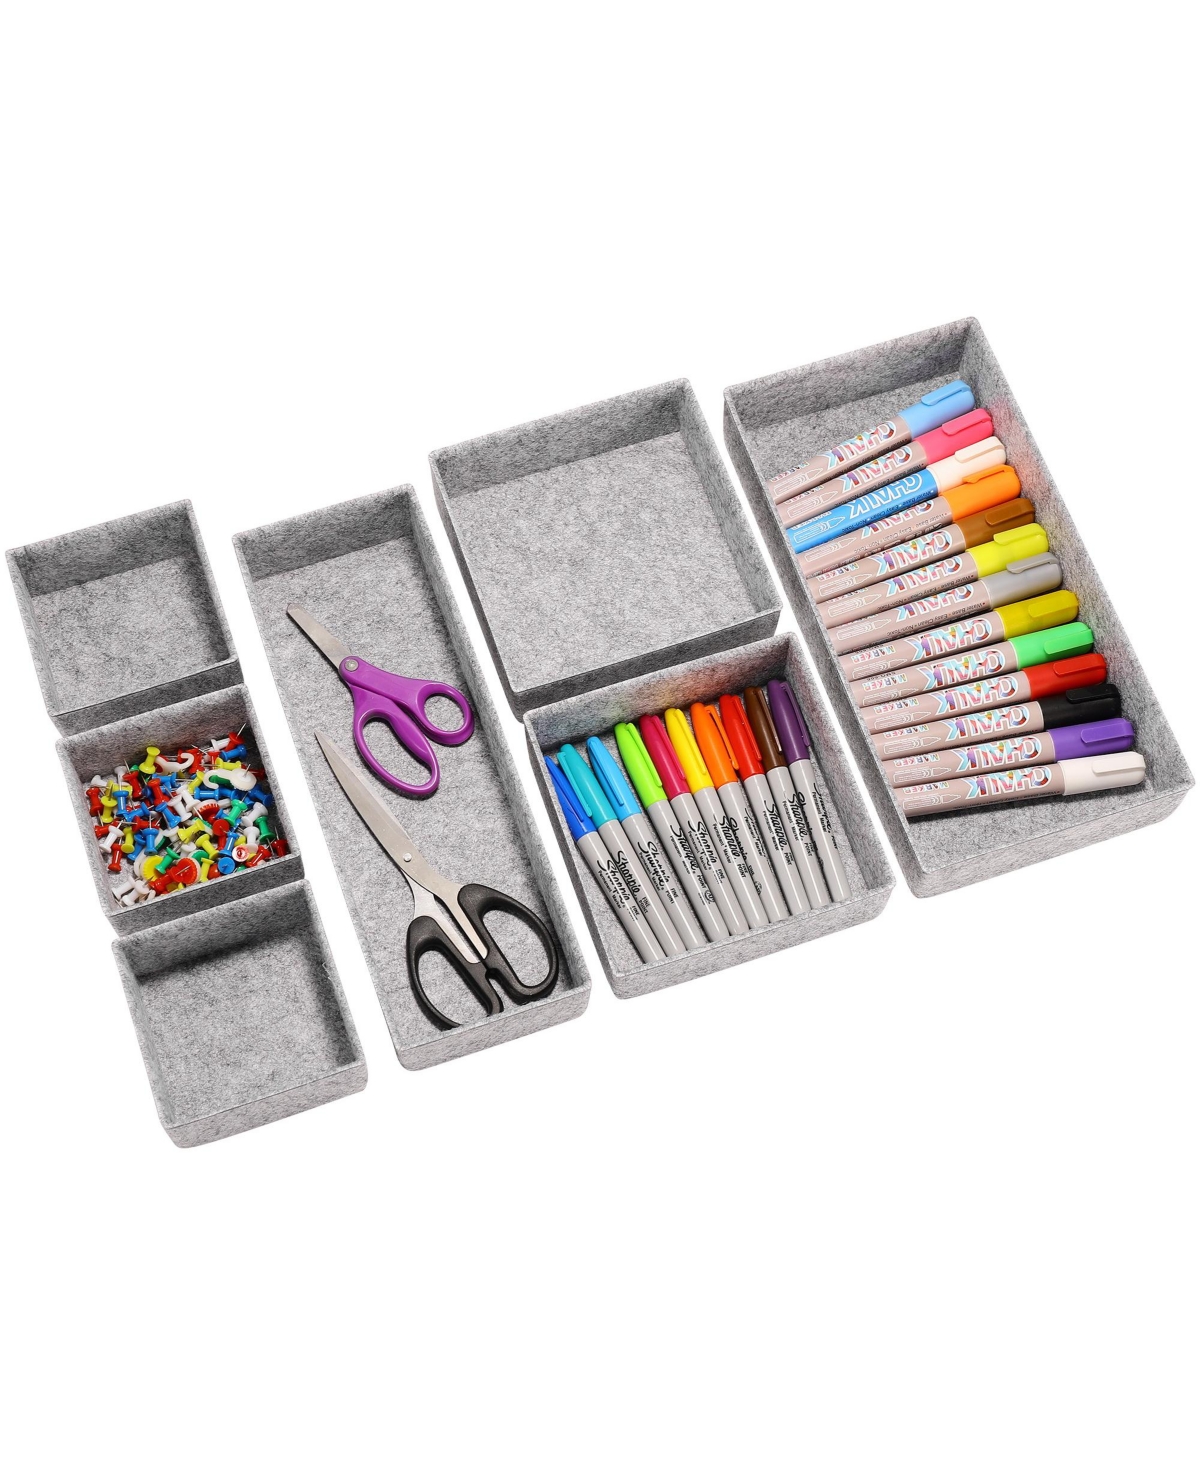 Shop Welaxy Deluxe 7 Piece Rectangular Organizer Bins Gift Boxed Set In Gray